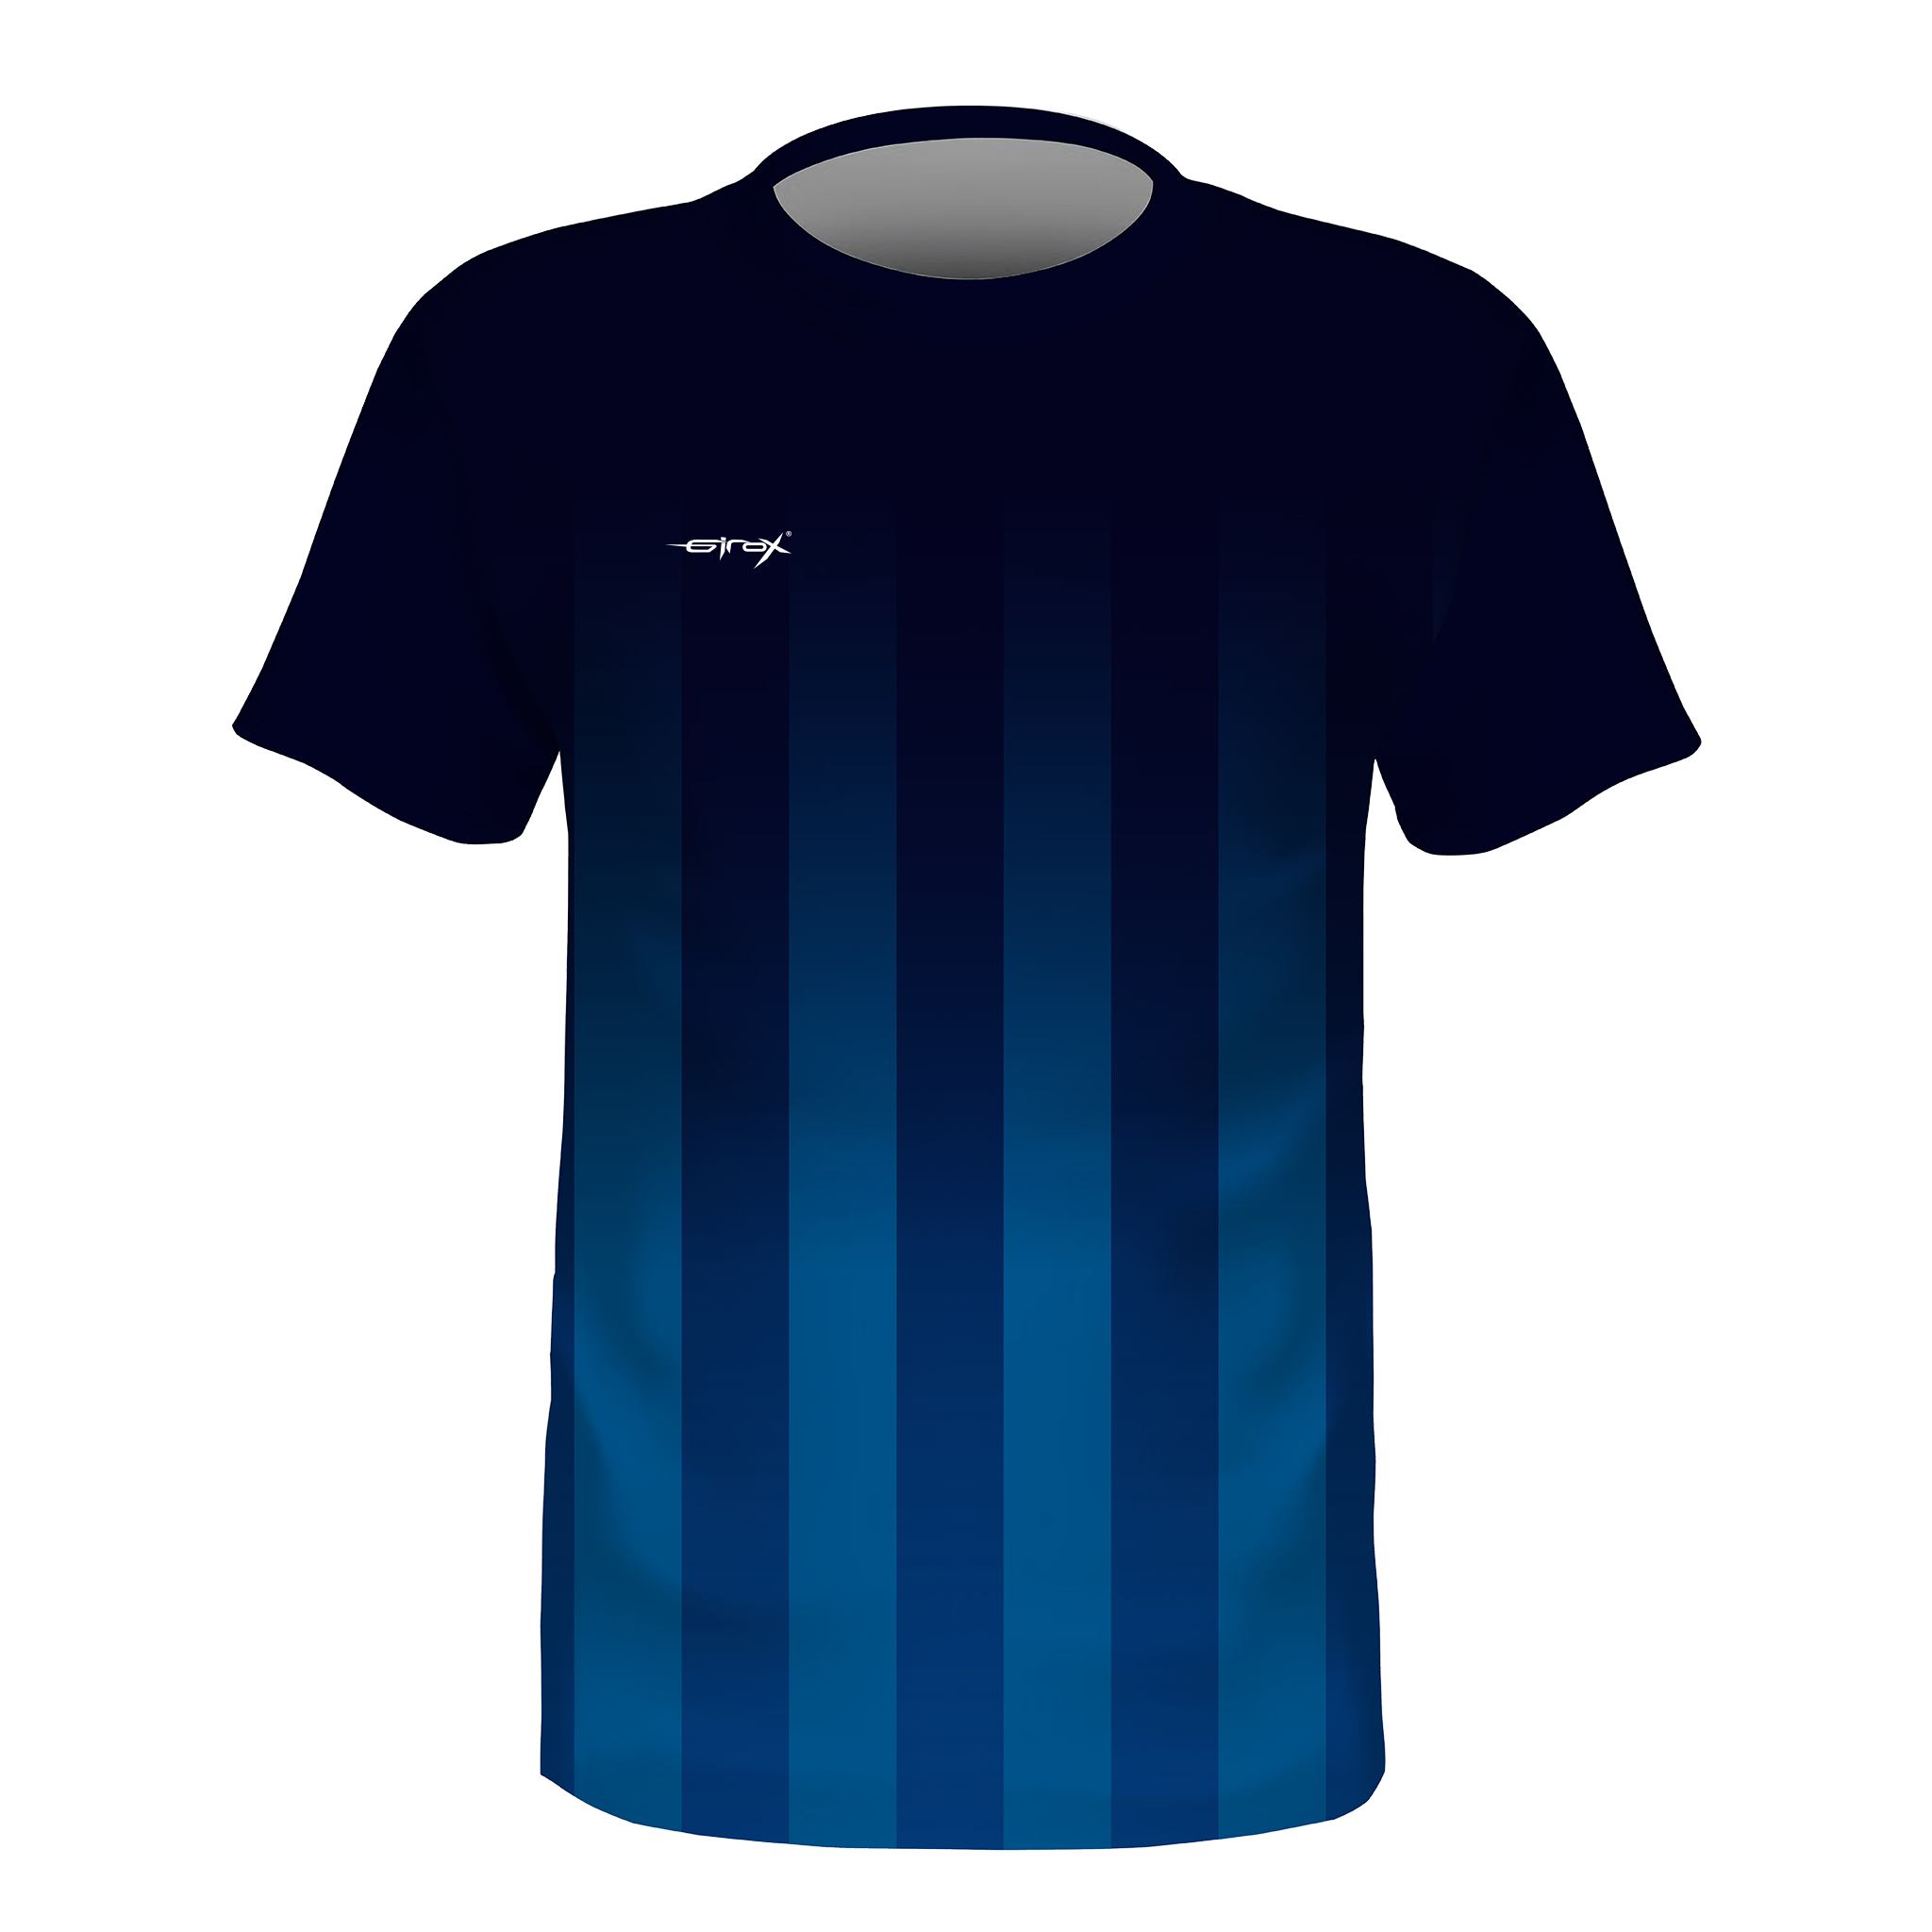 Buy Jersey Design - Blue and Black Soccer Jersey Design https